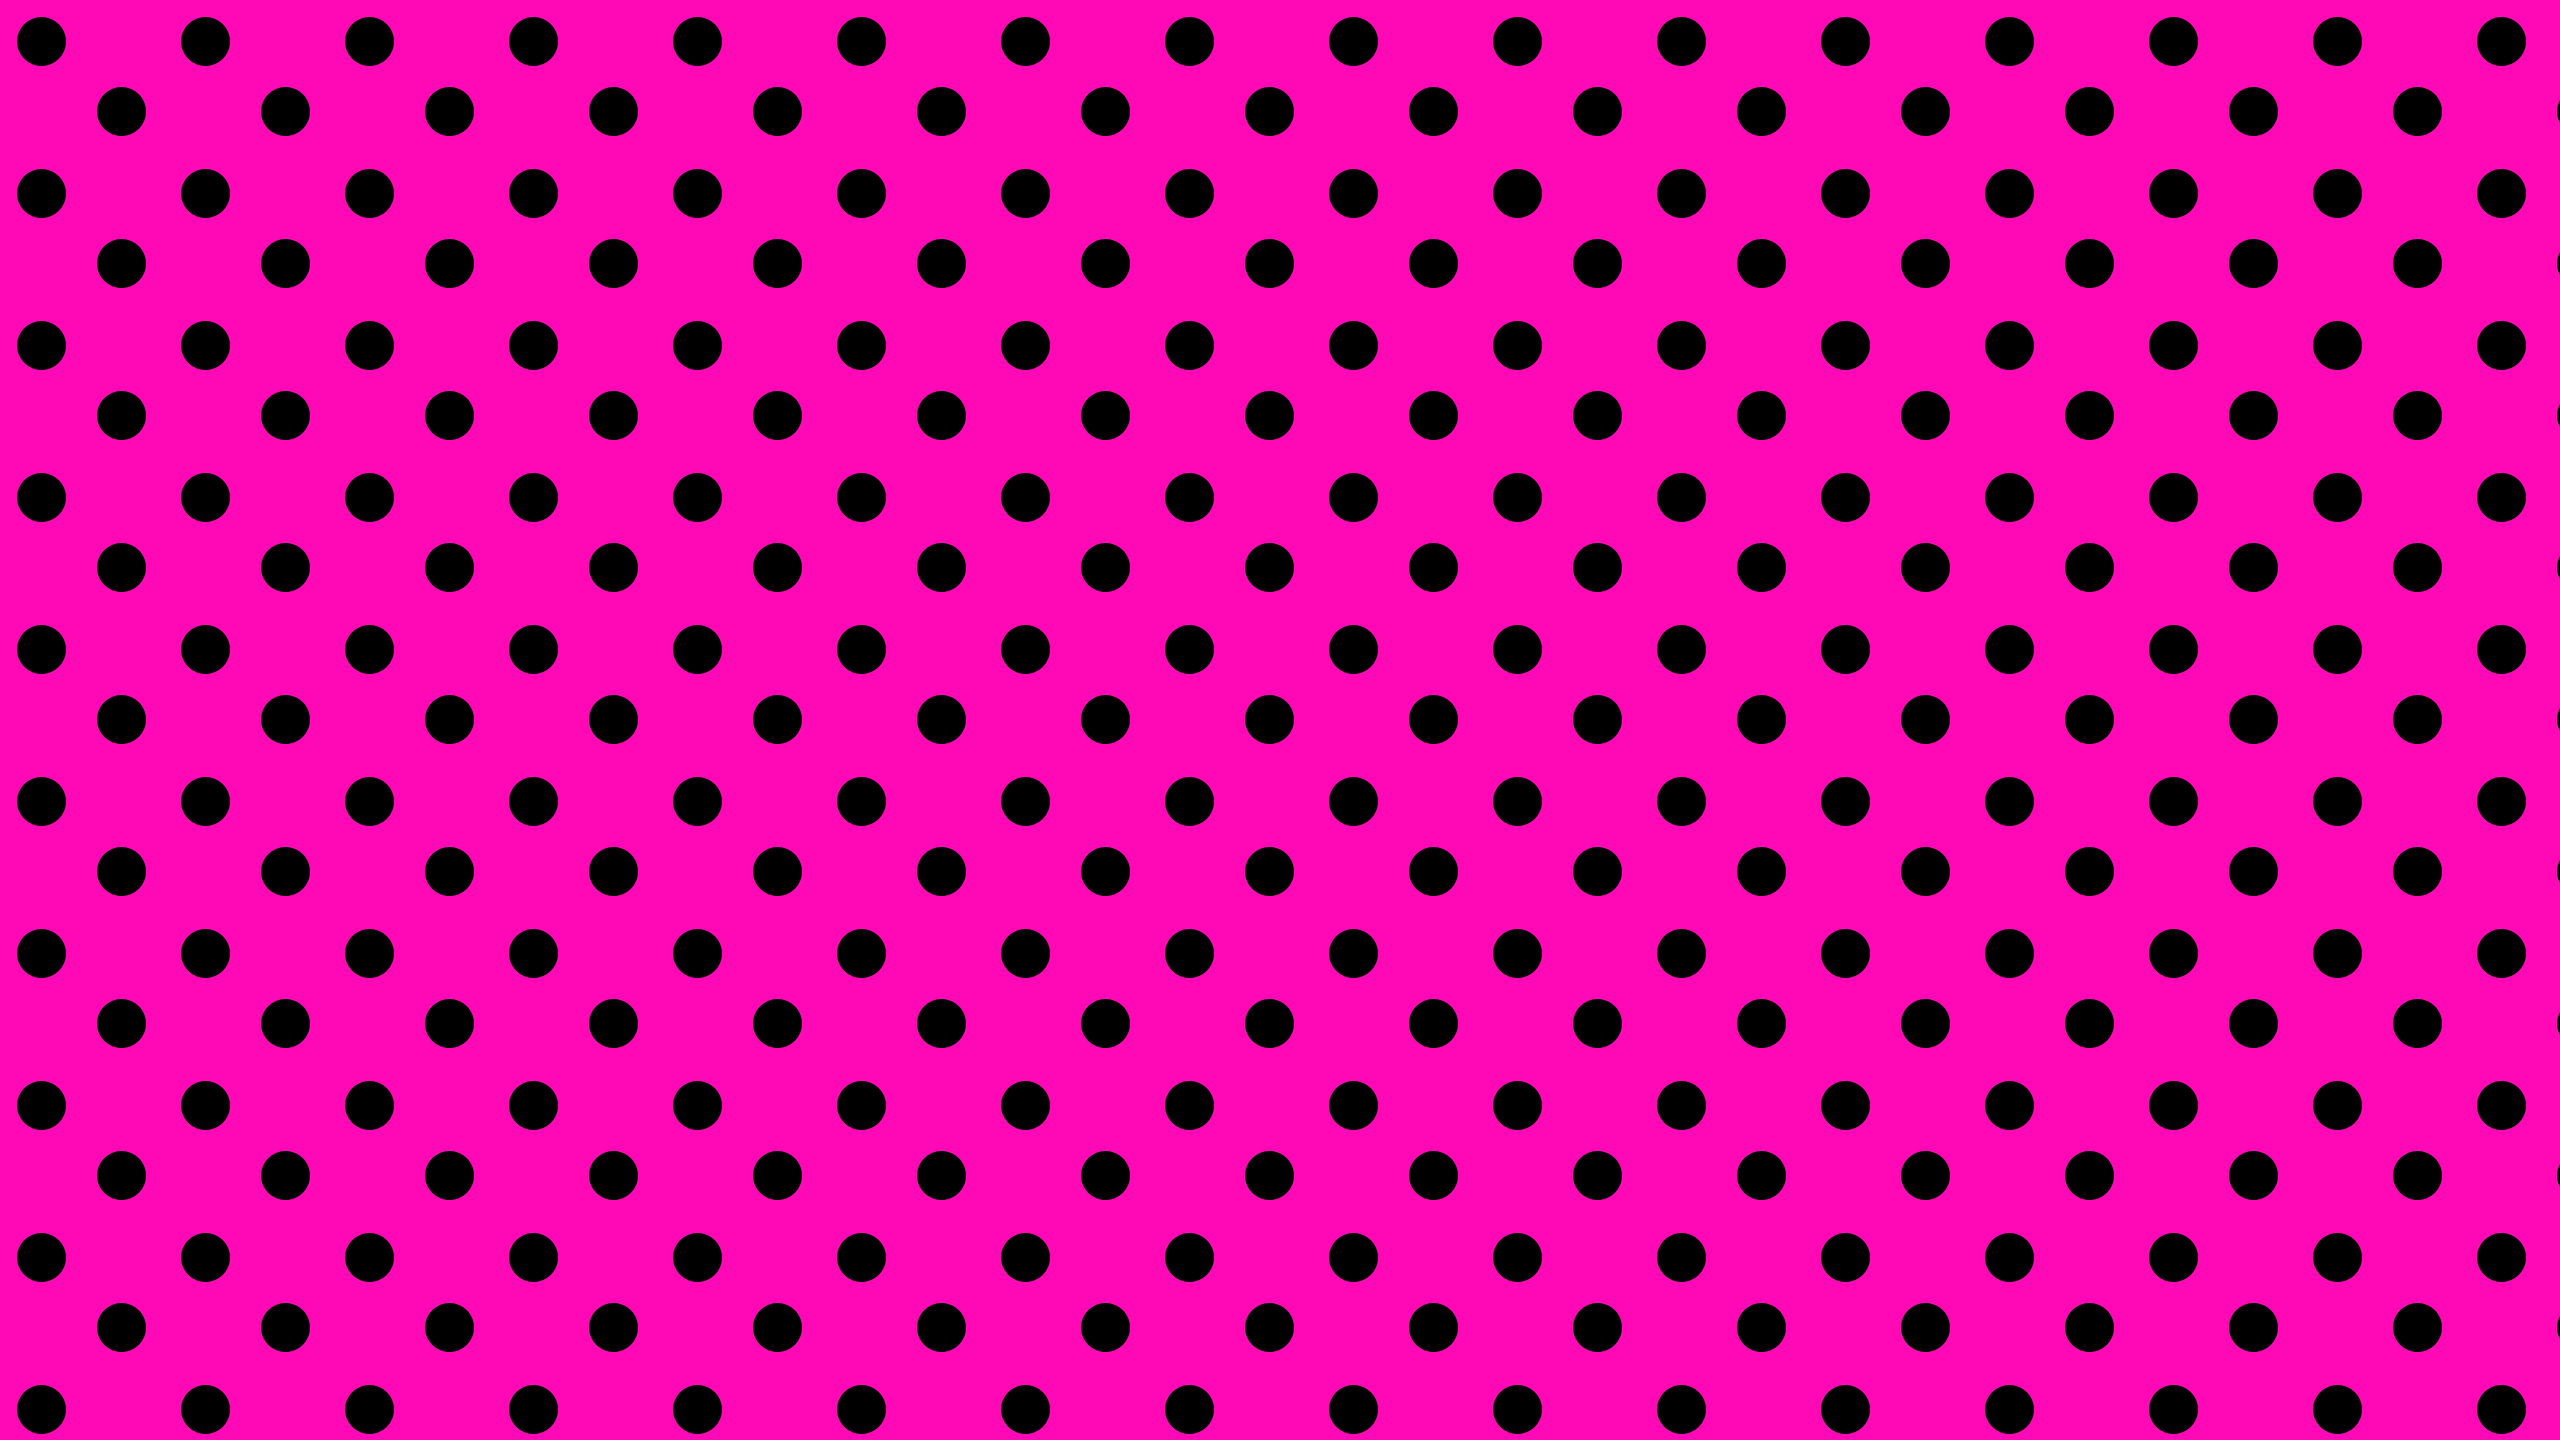 Large Pink Black Desktop Wallpaper is easy Just save the wallpaper